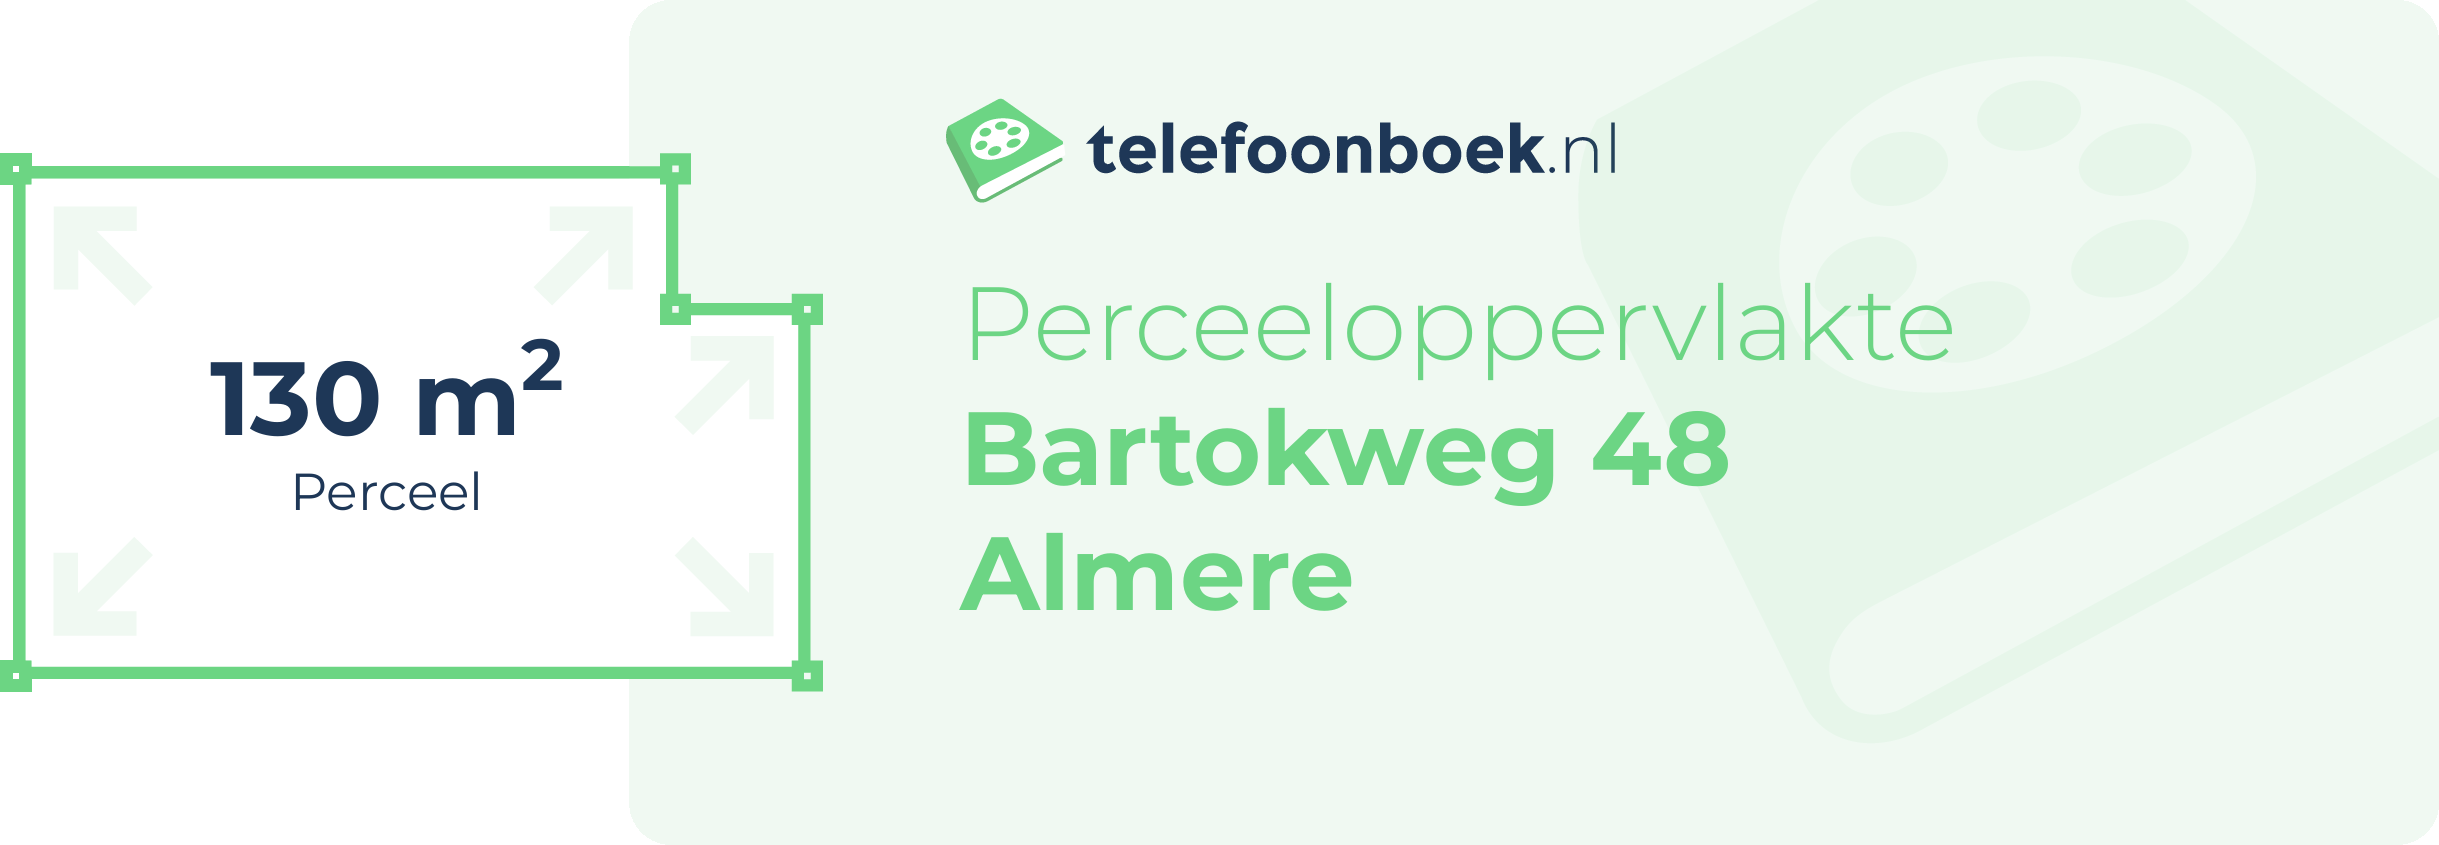 Perceeloppervlakte Bartokweg 48 Almere